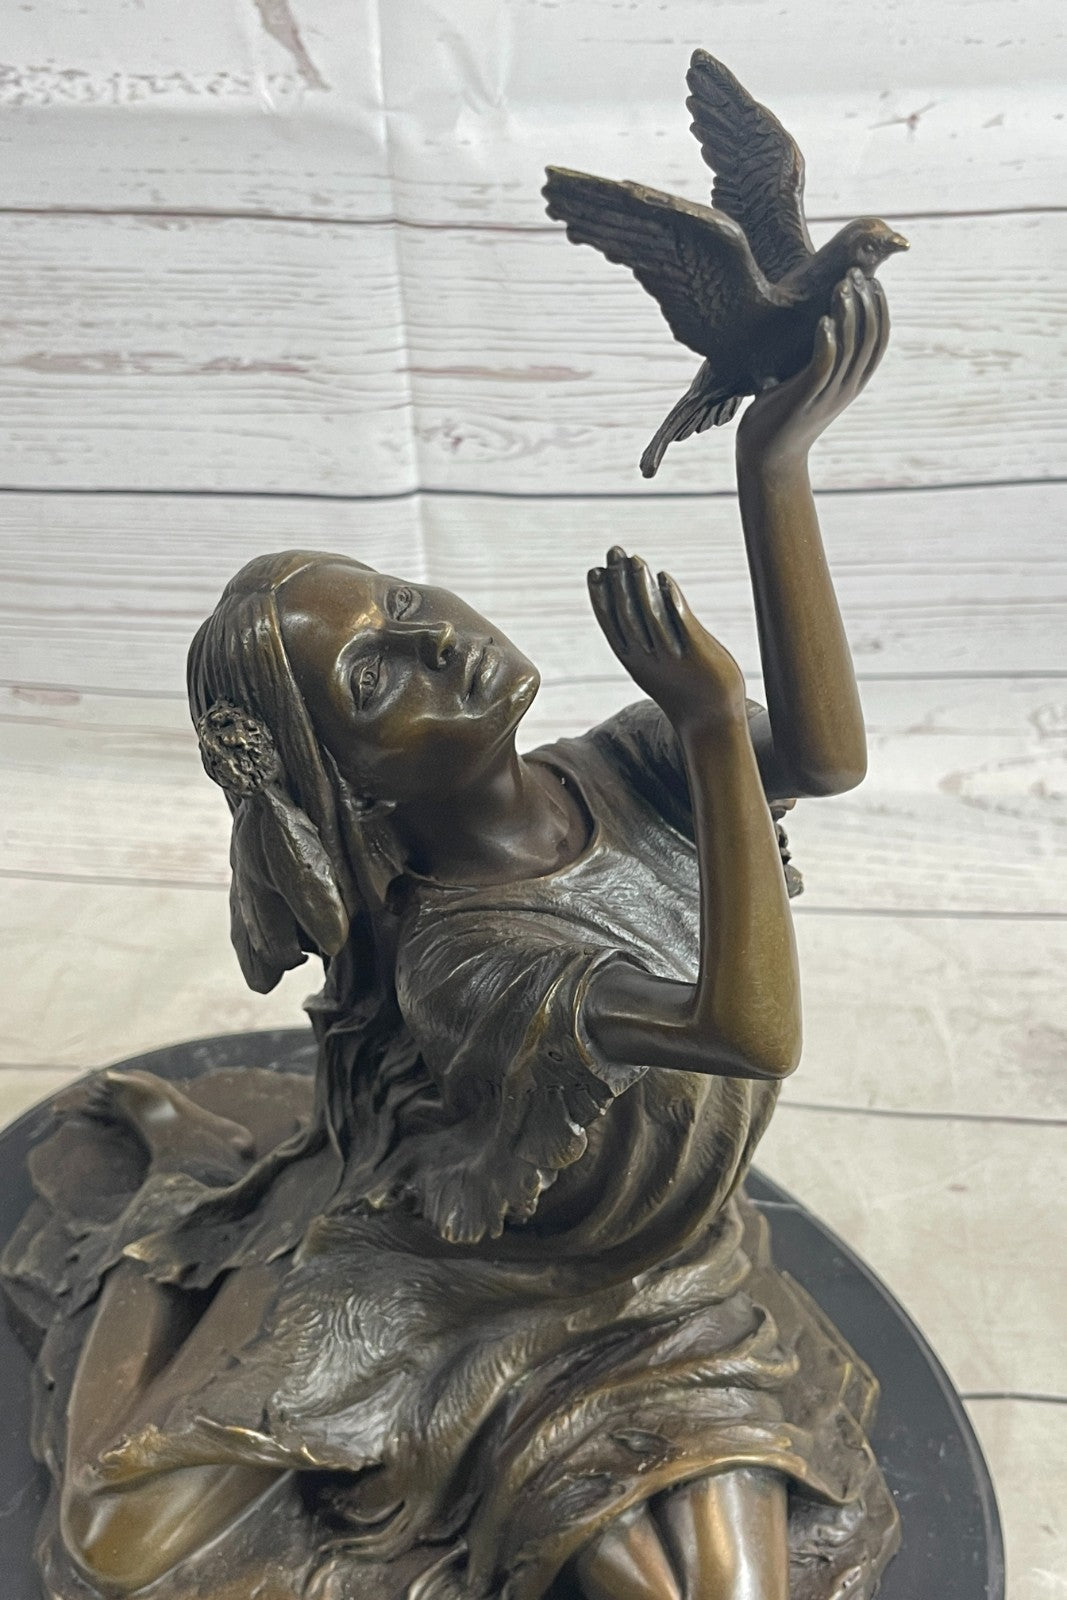 Collectible Native American Woman Bronze Statue with Bird by Milo Fine Art Figurine